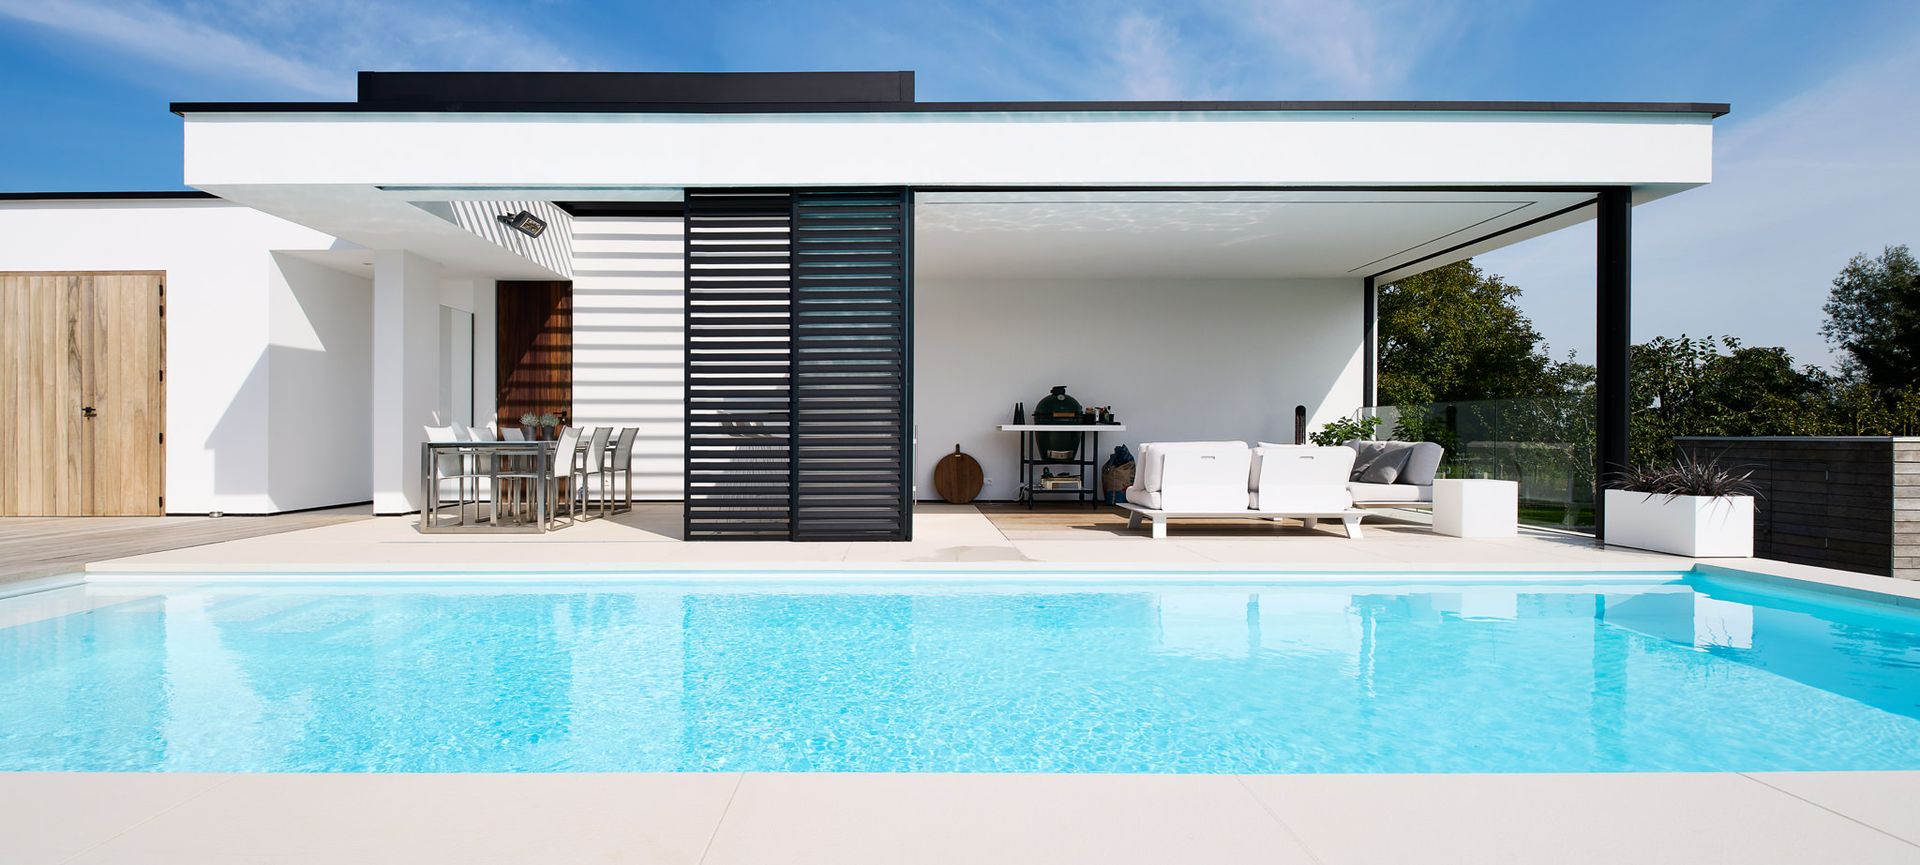 Architectuur foto zwembad met poolhouse